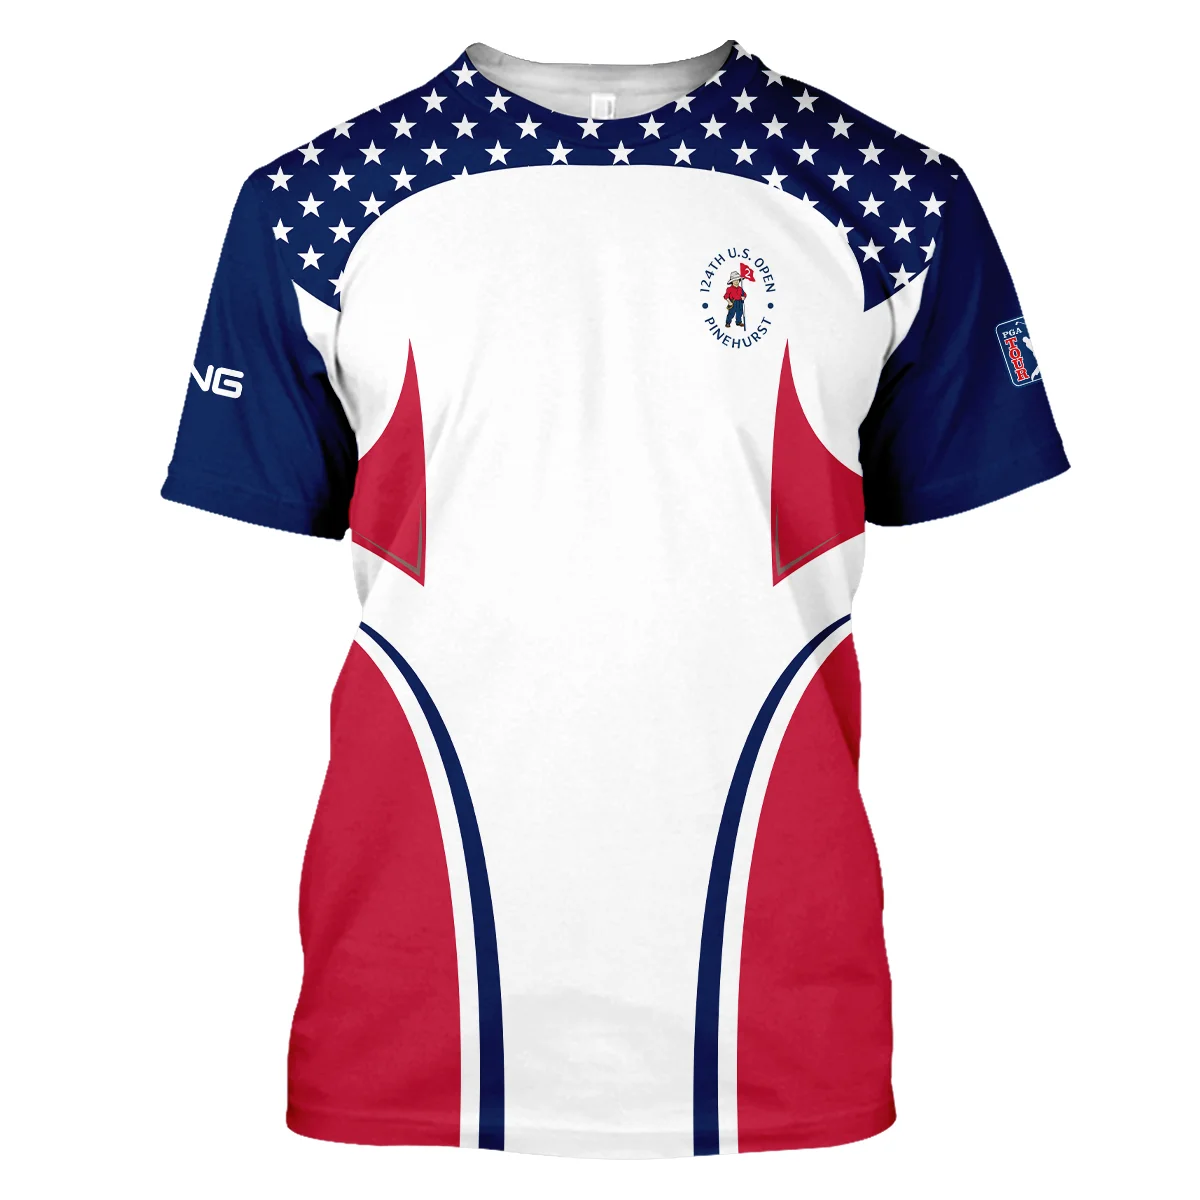 124th U.S. Open Pinehurst Ping Stars White Dark Blue Red Line Unisex T-Shirt Style Classic T-Shirt